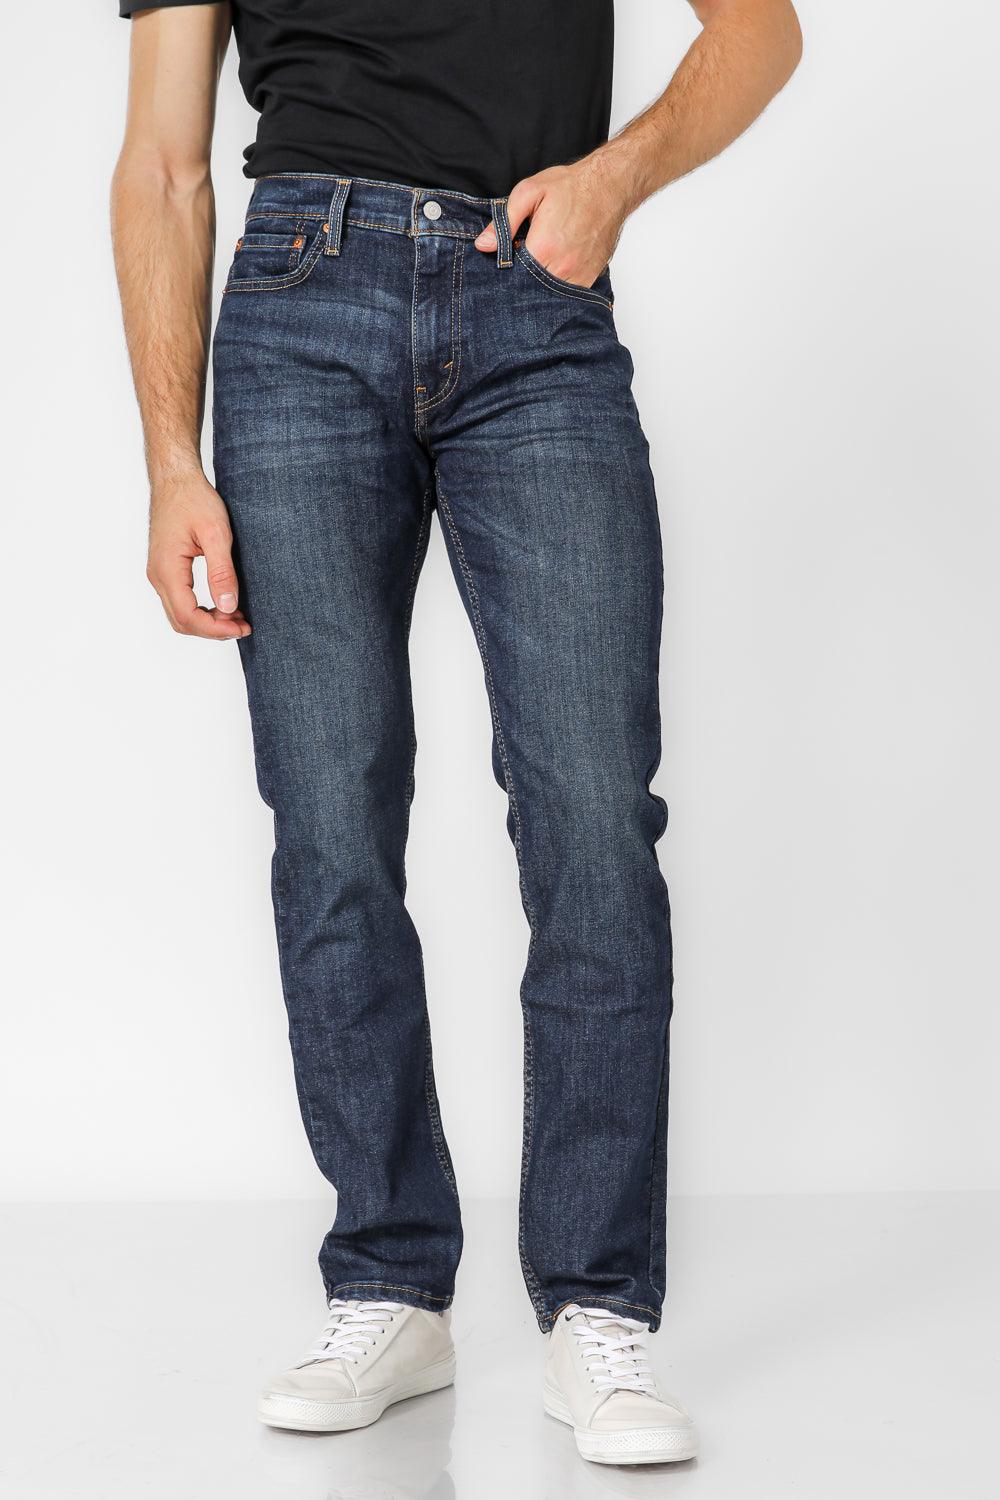 LEVI'S - ג'ינס 511 Slim בצבע DARK INDIGO - MASHBIR//365